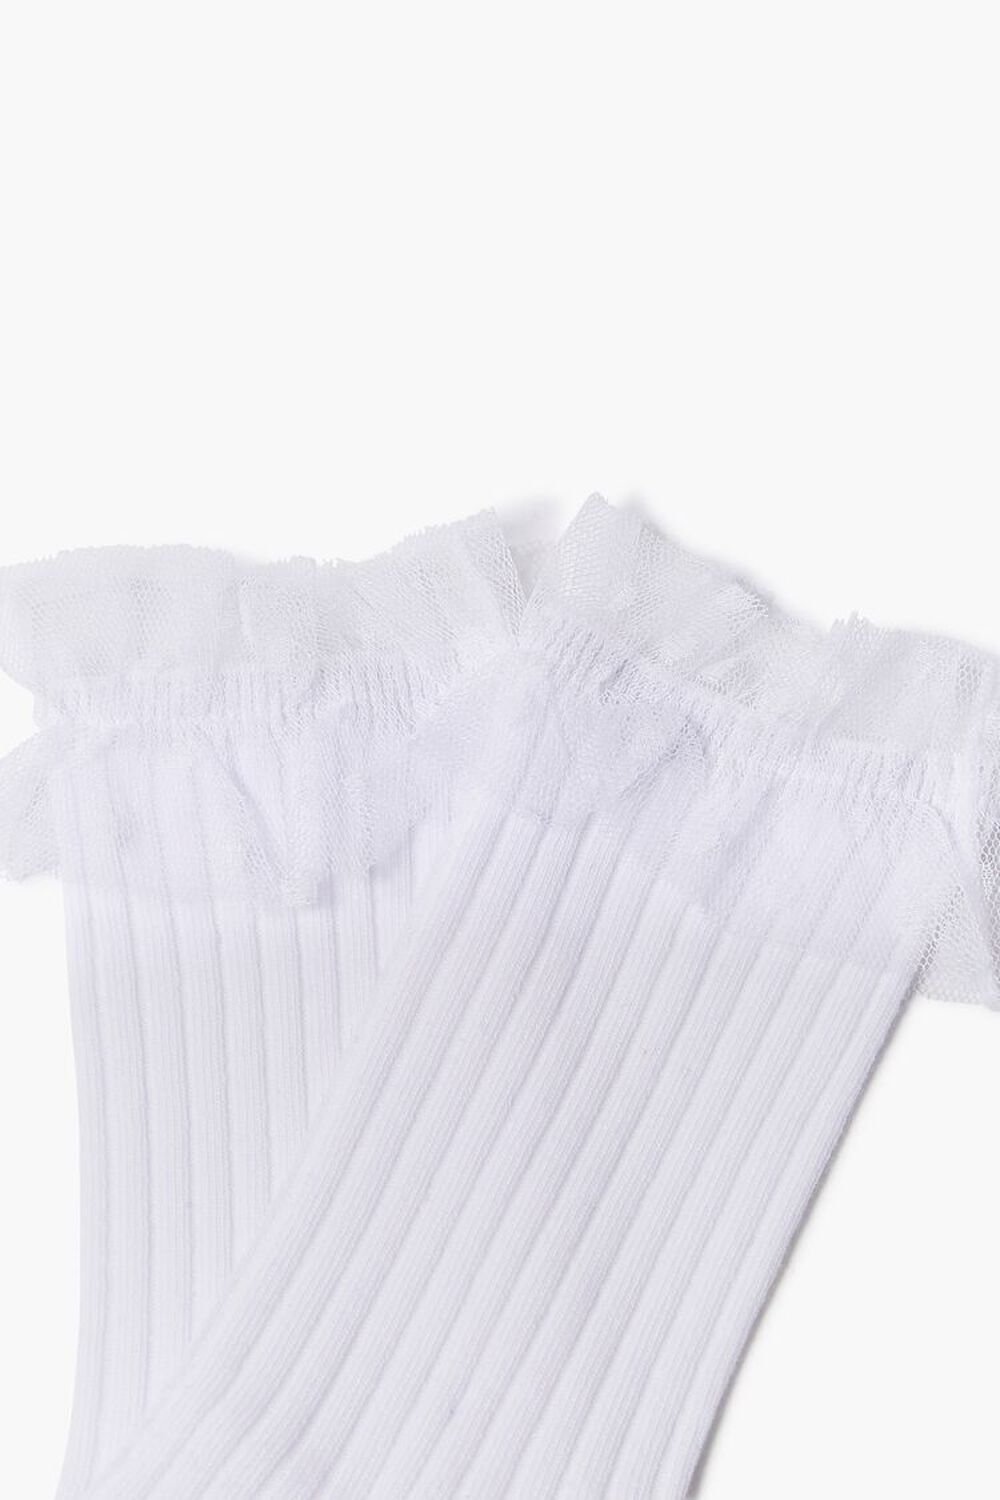 WHITE Polka Dot Lace-Trim Crew Socks, image 2